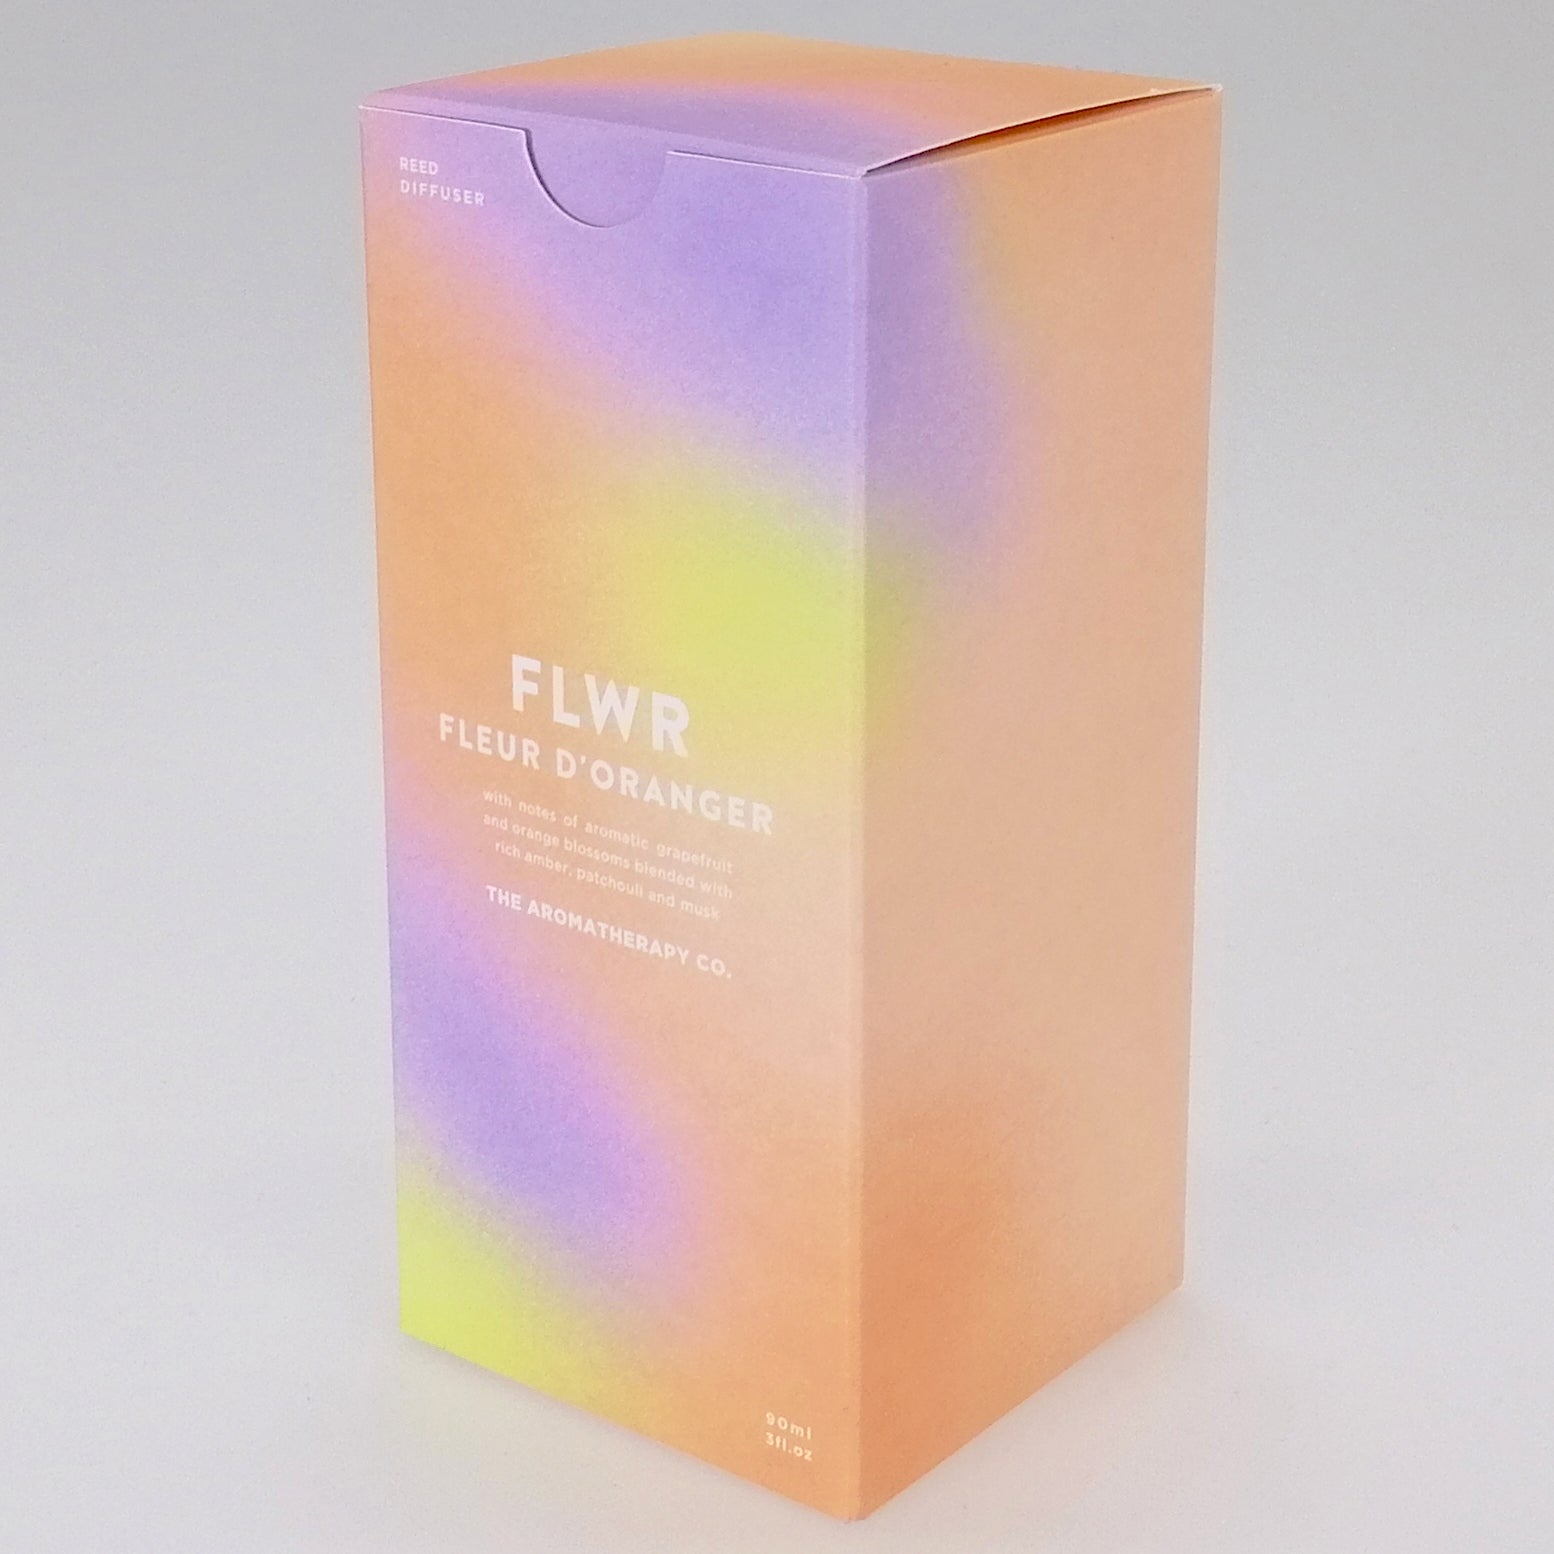 The Aromatherapy Co. FLWR Diffuser - Fleur D'Oranger